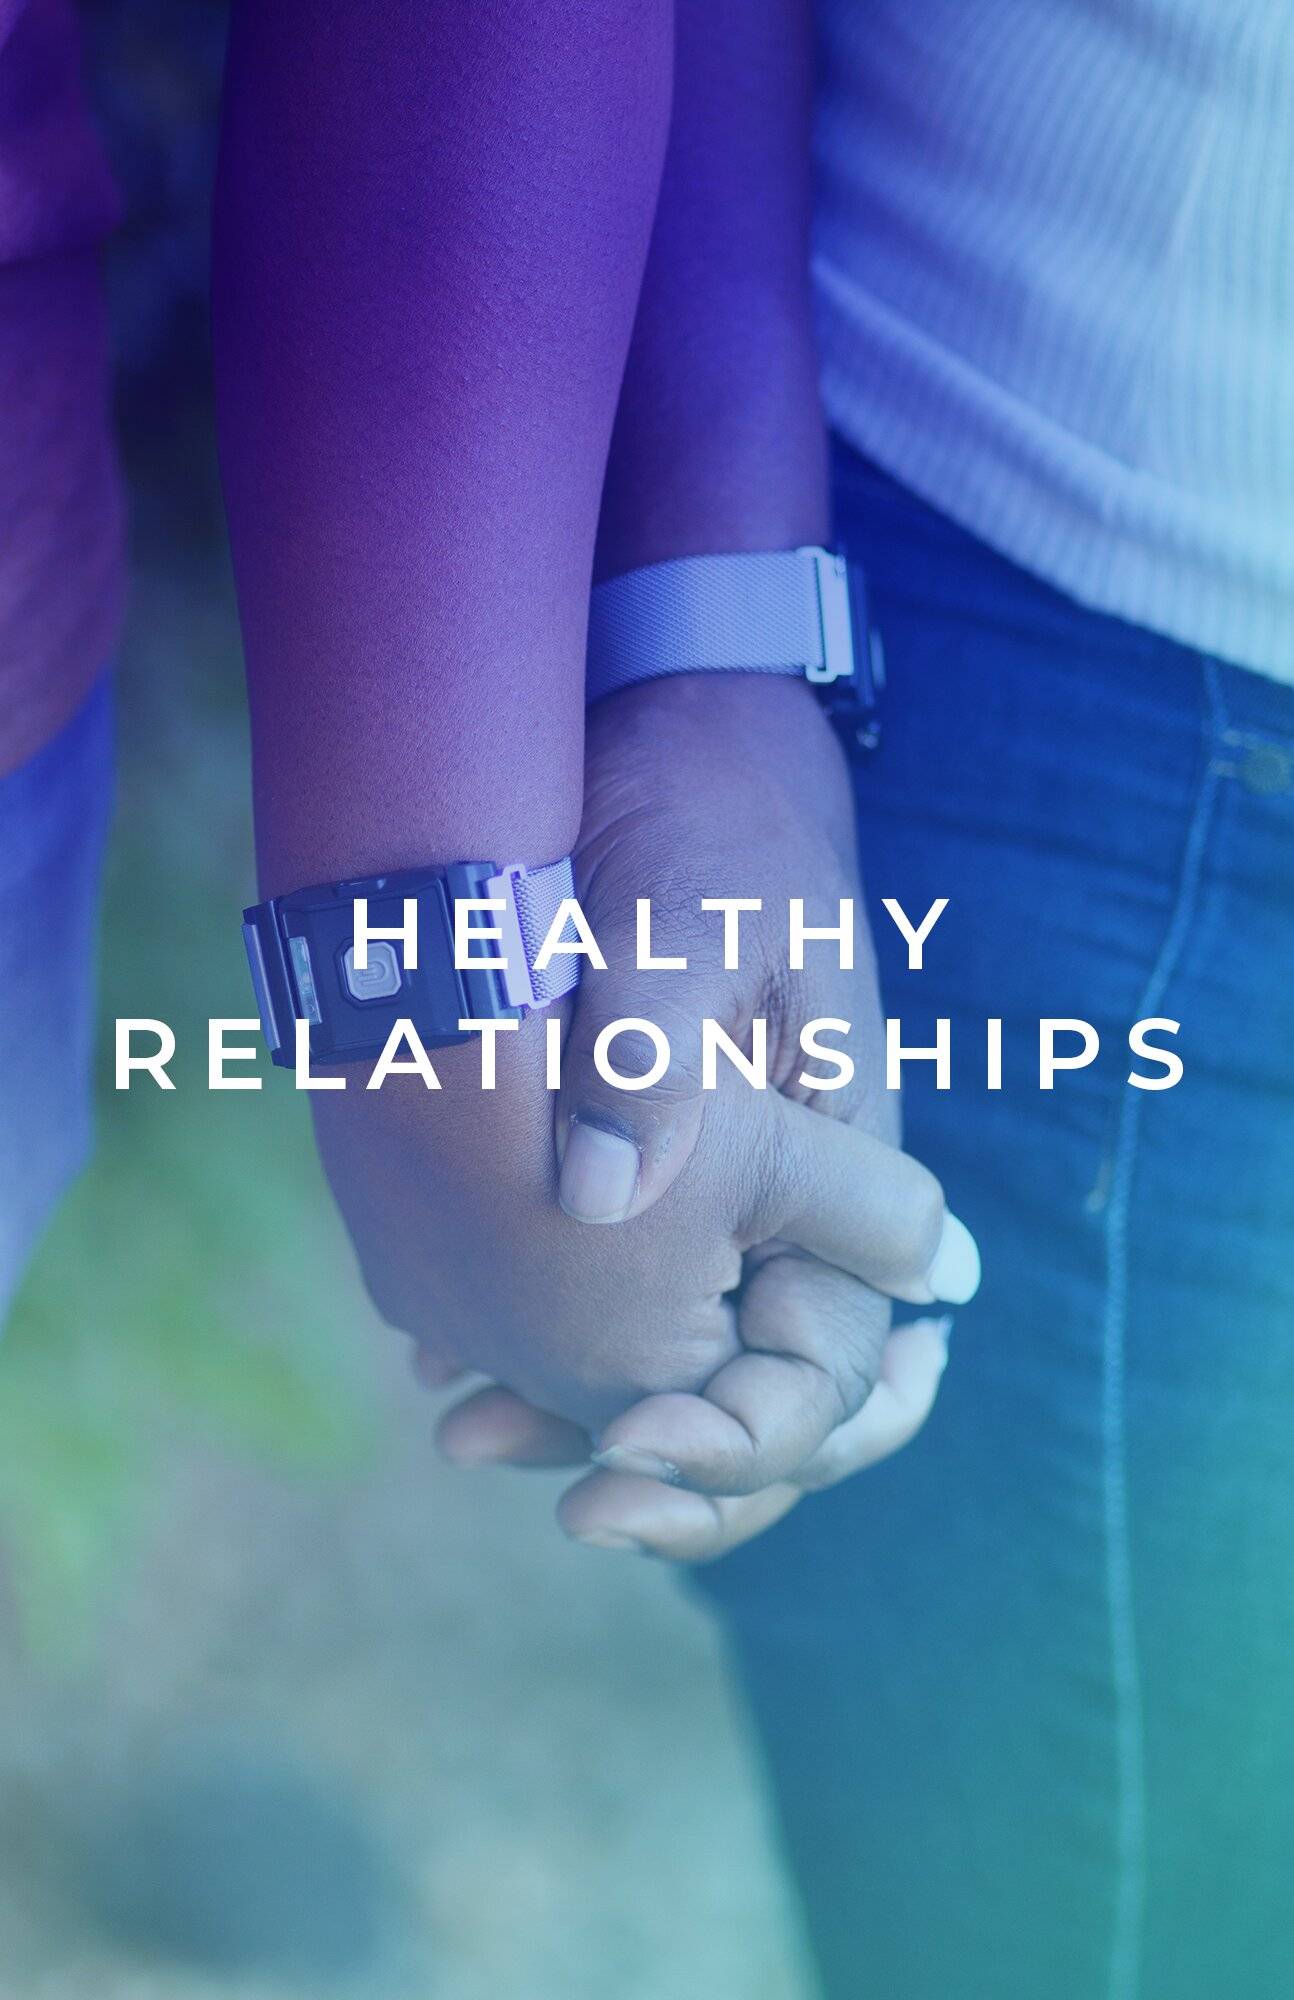 Healthy relationships blog